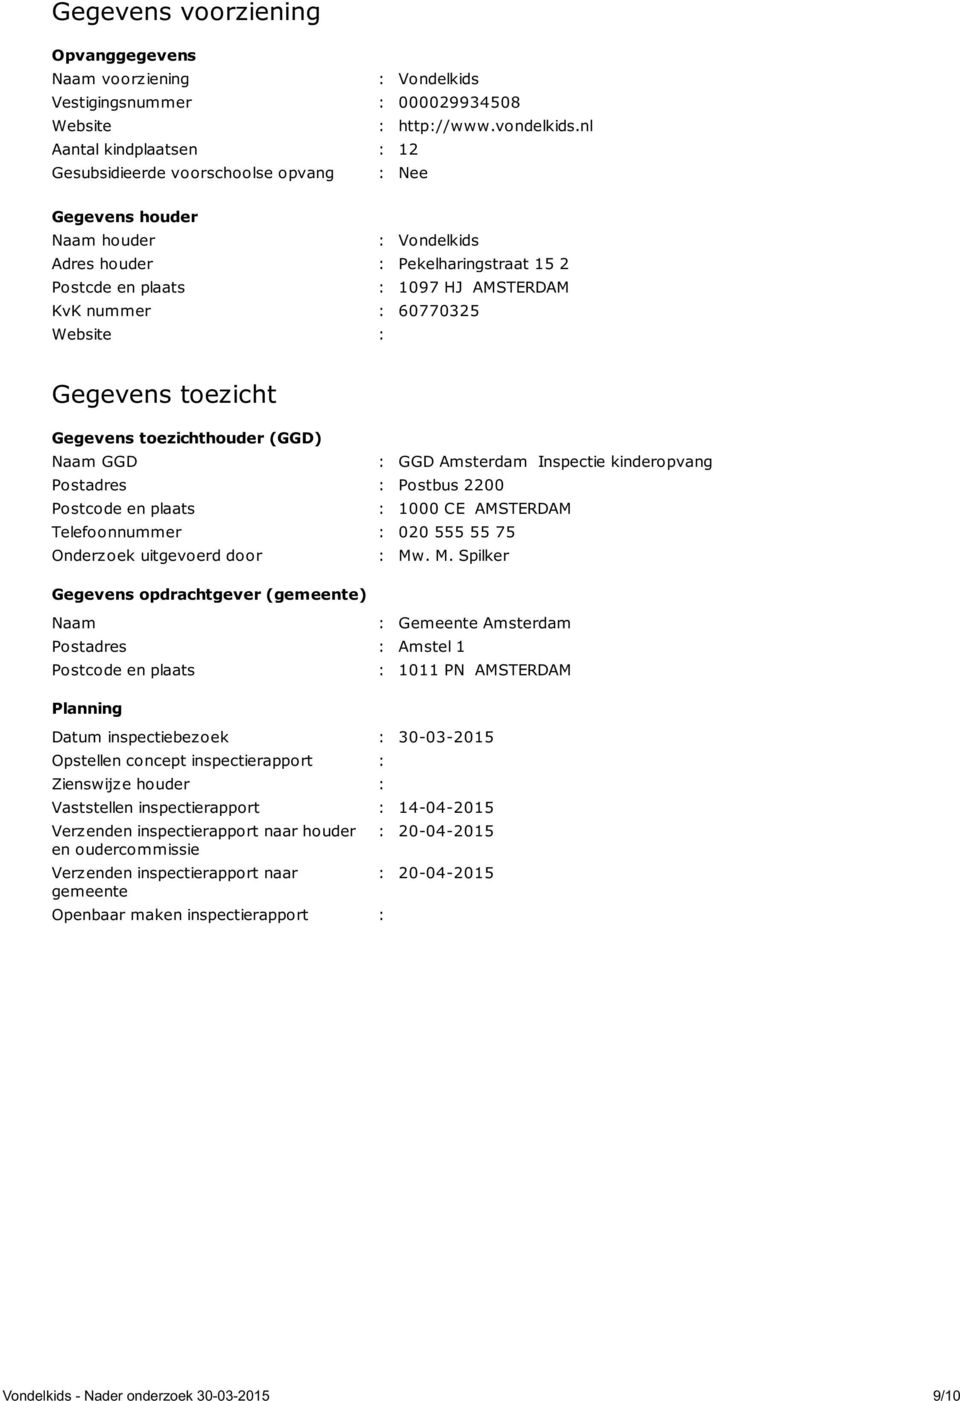 60770325 Website : Gegevens toezicht Gegevens toezichthouder (GGD) Naam GGD : GGD Amsterdam Inspectie kinderopvang Postadres : Postbus 2200 Postcode en plaats : 1000 CE AMSTERDAM Telefoonnummer : 020